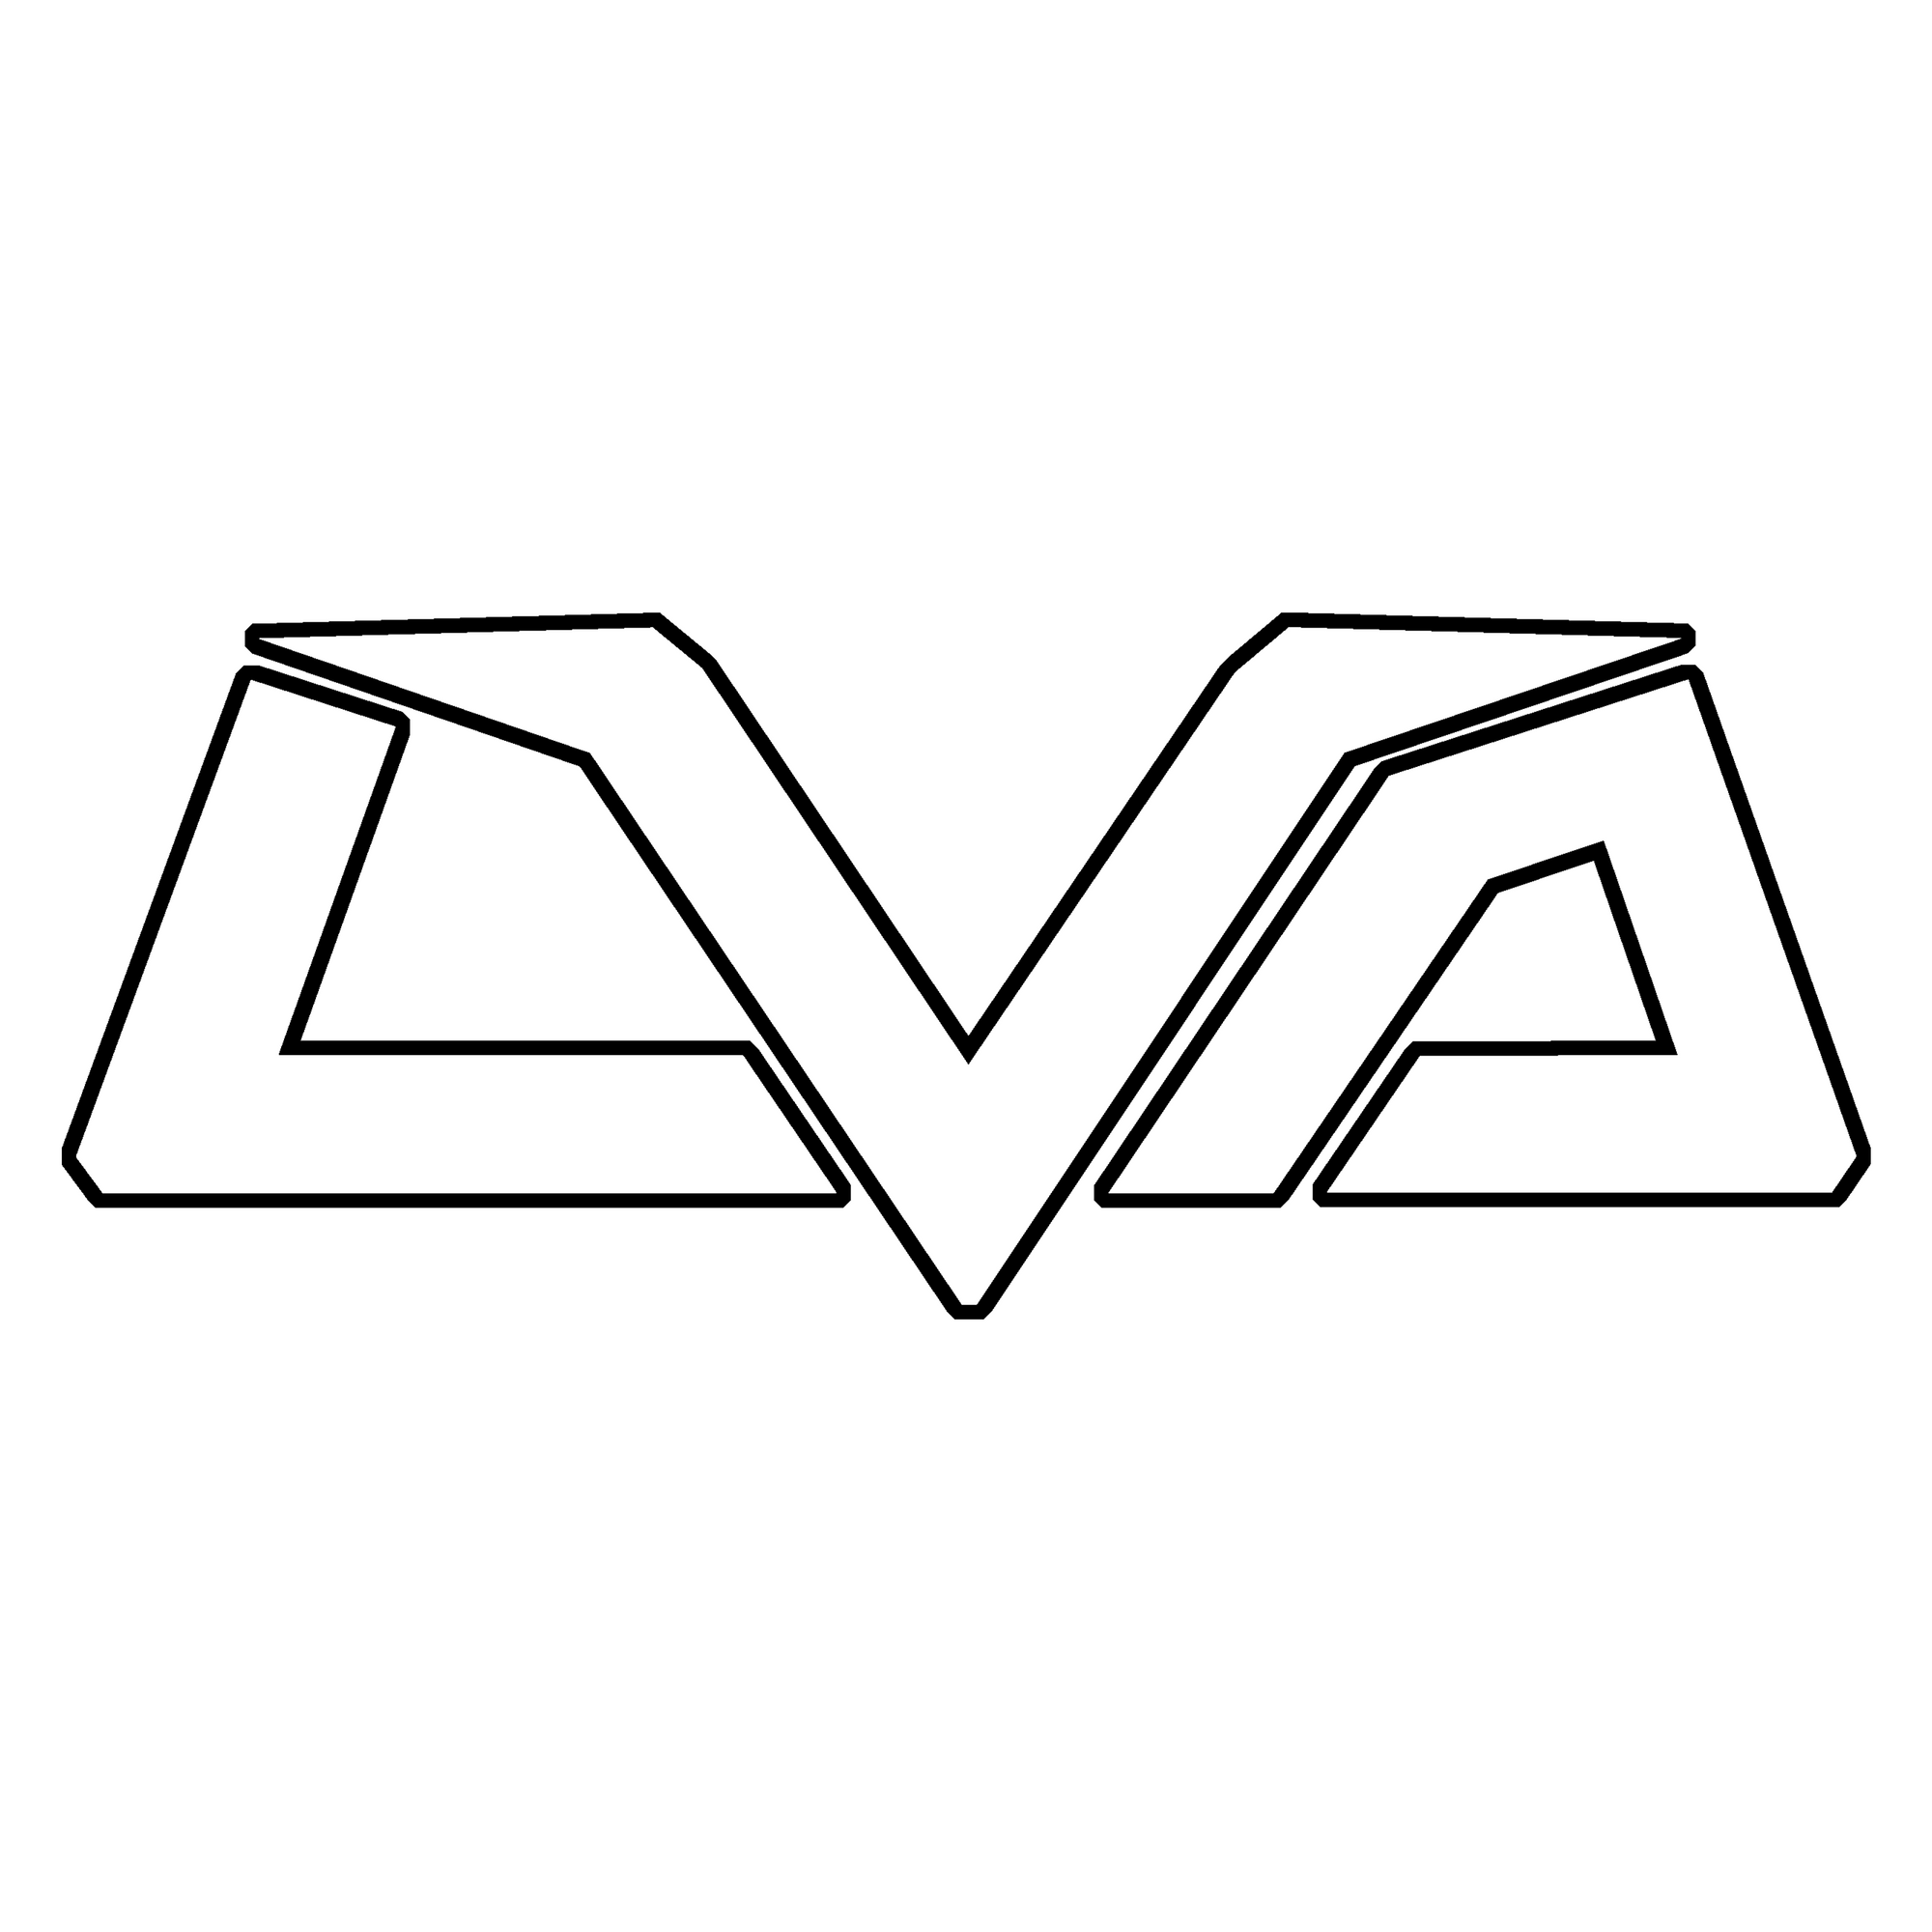 LVA "Outline" Decal